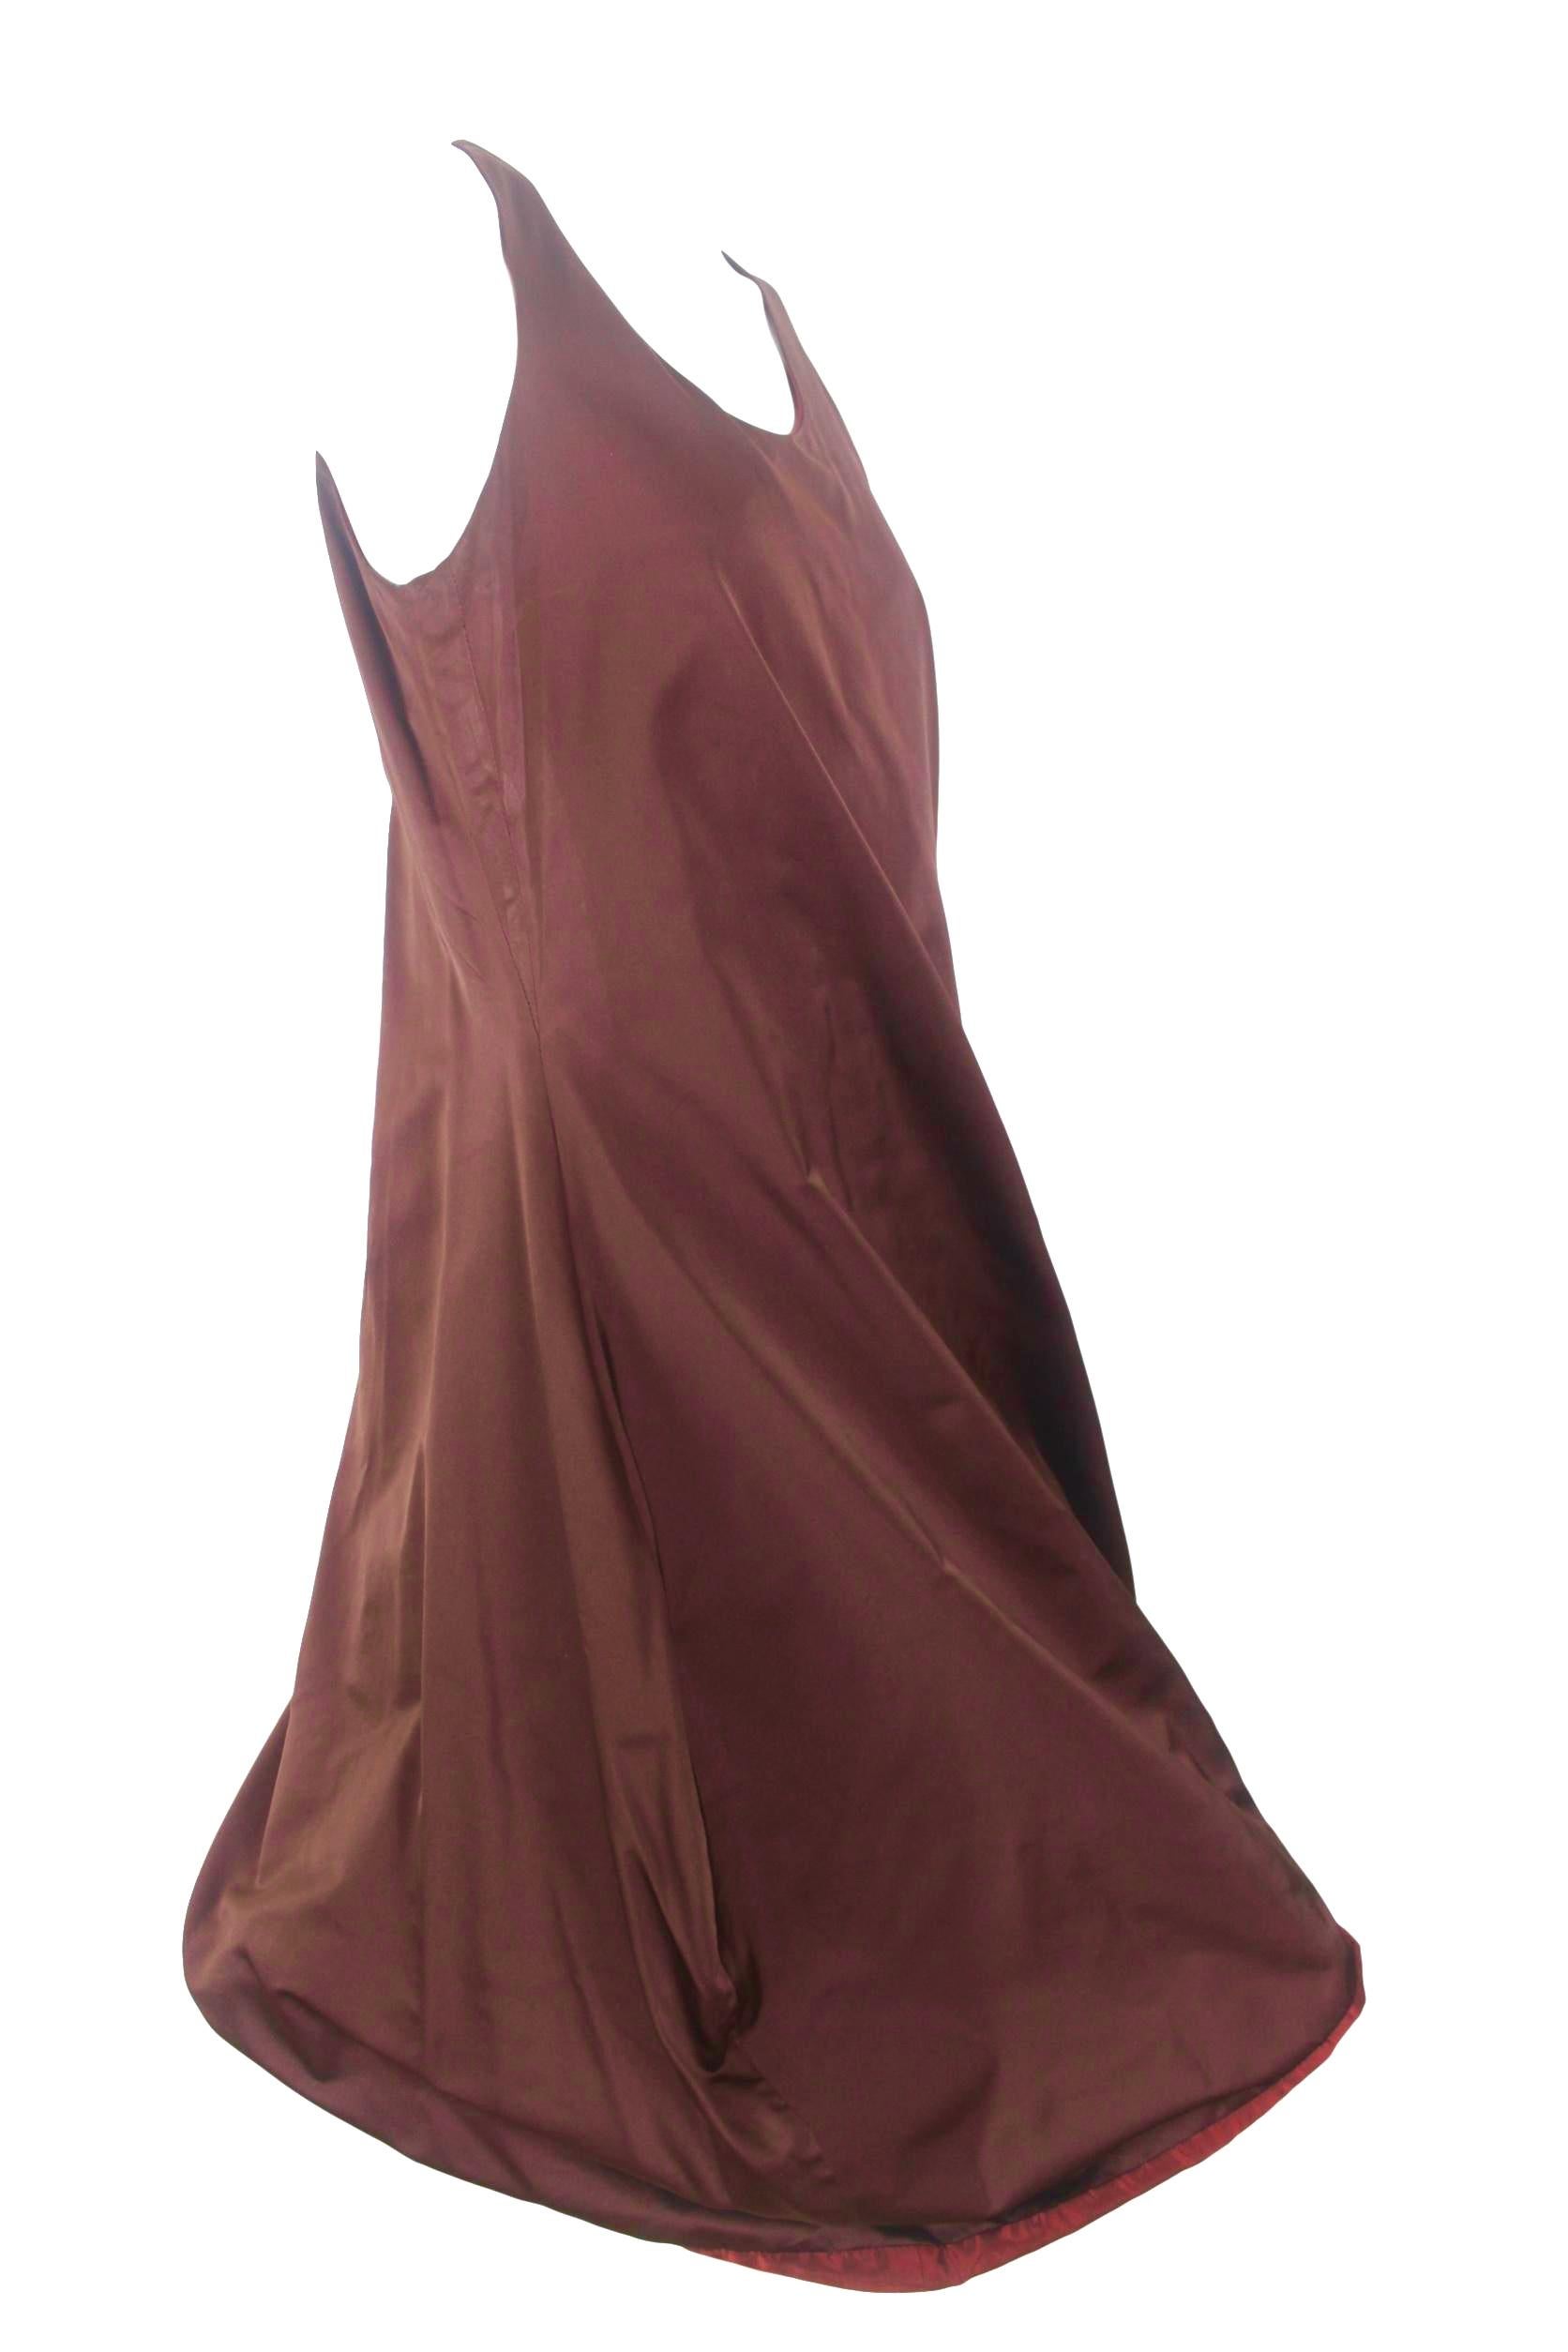 Jean Paul Gaultier Classique Label Bronze Satin Balloon Dress Spring/Summer 2003 For Sale 7